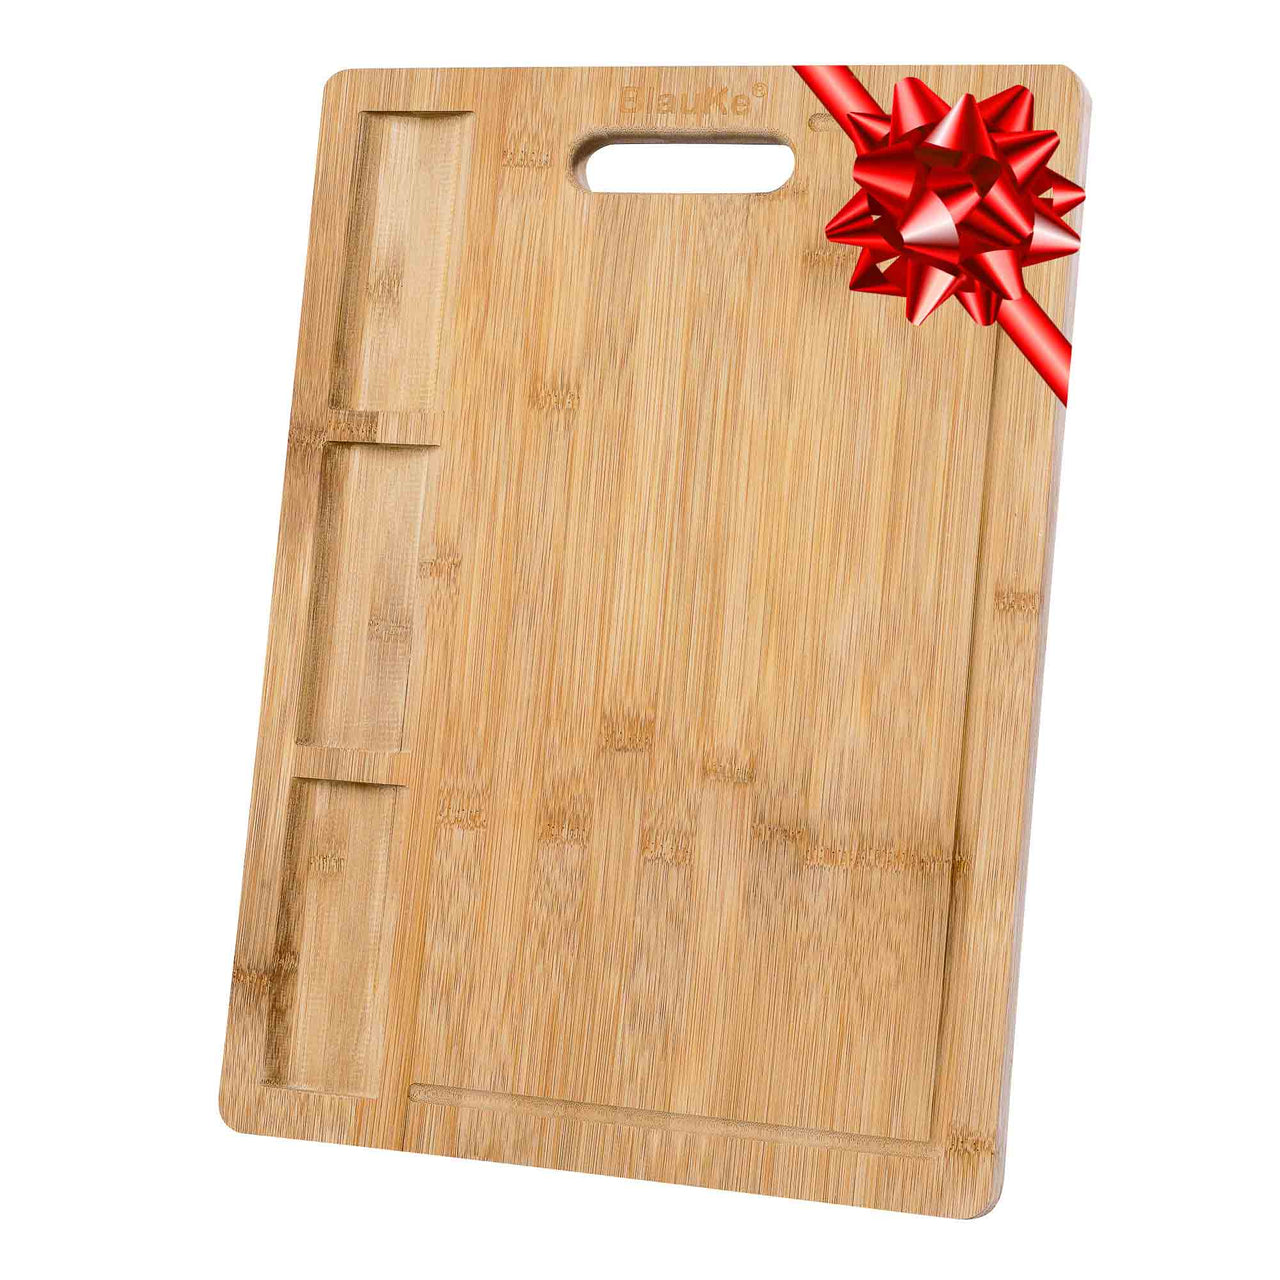 Extra Large Bamboo Cutting Board - 17x12.5 inch Wood Cutting Board - Mercantile Mountain